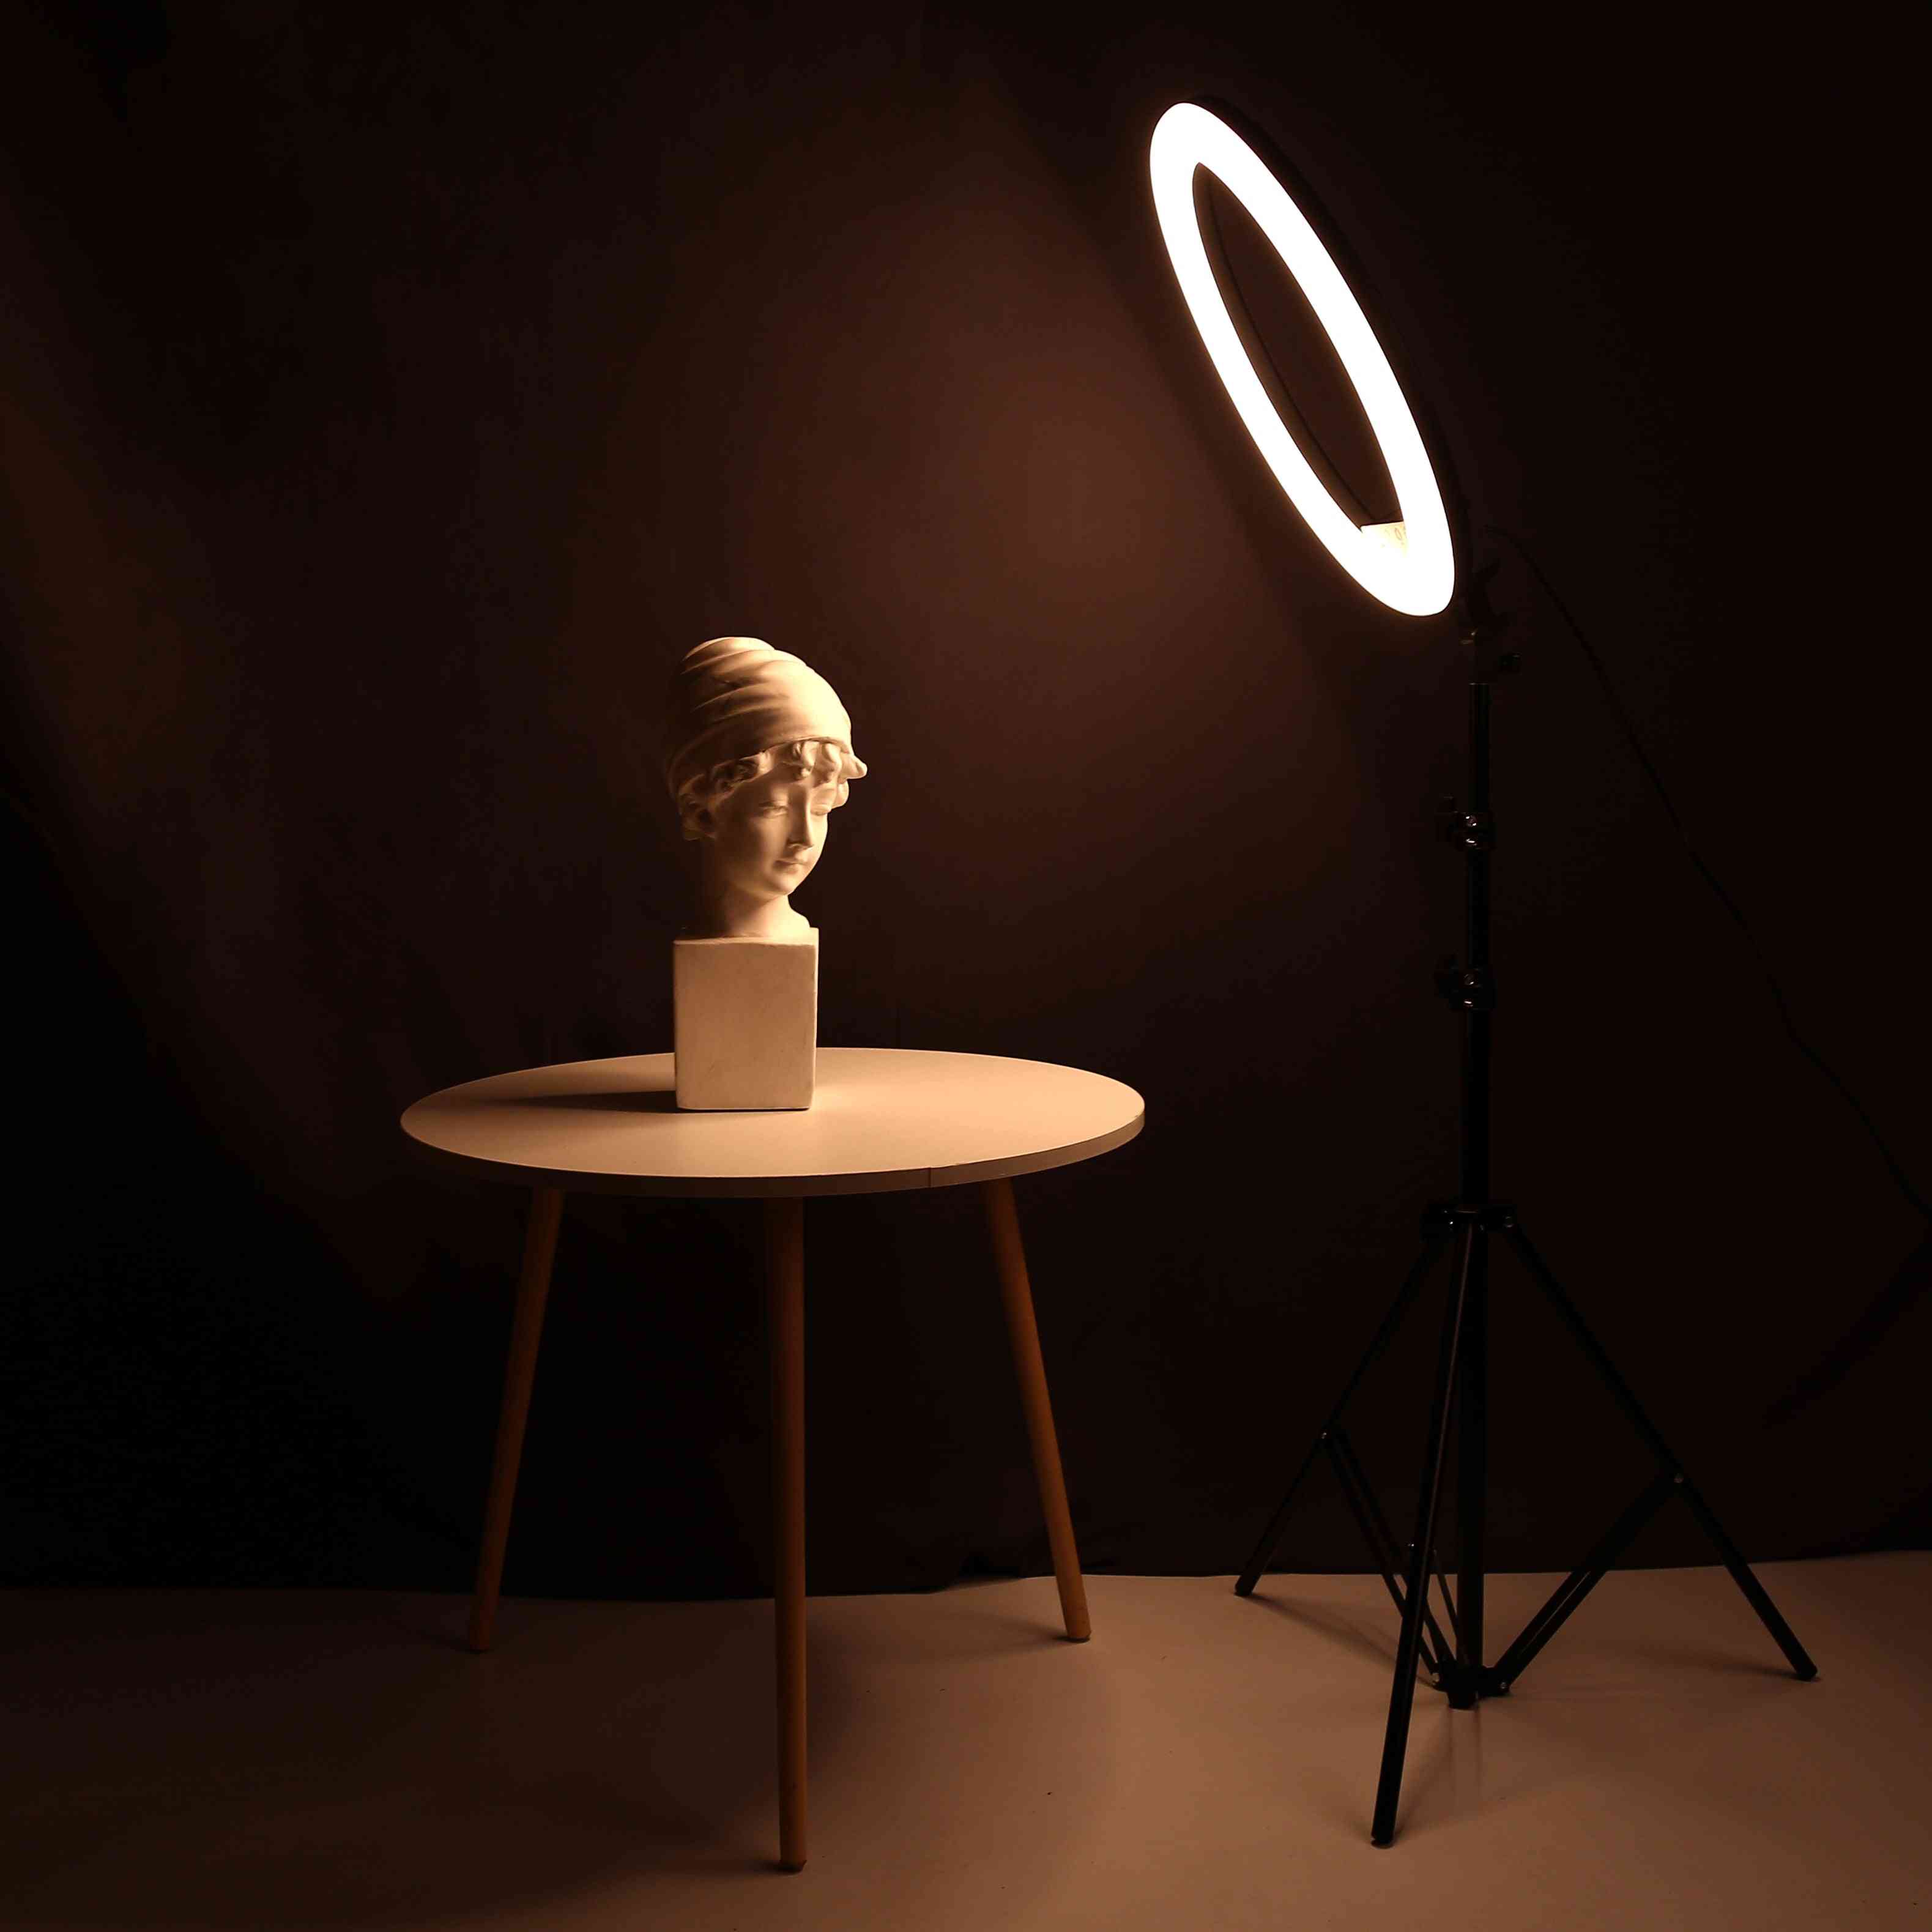 18 inch fotostudio verlichting led ring licht- aanraakbediening fotografie grote ringlamp met 2m standaard voor portret, make-up, video